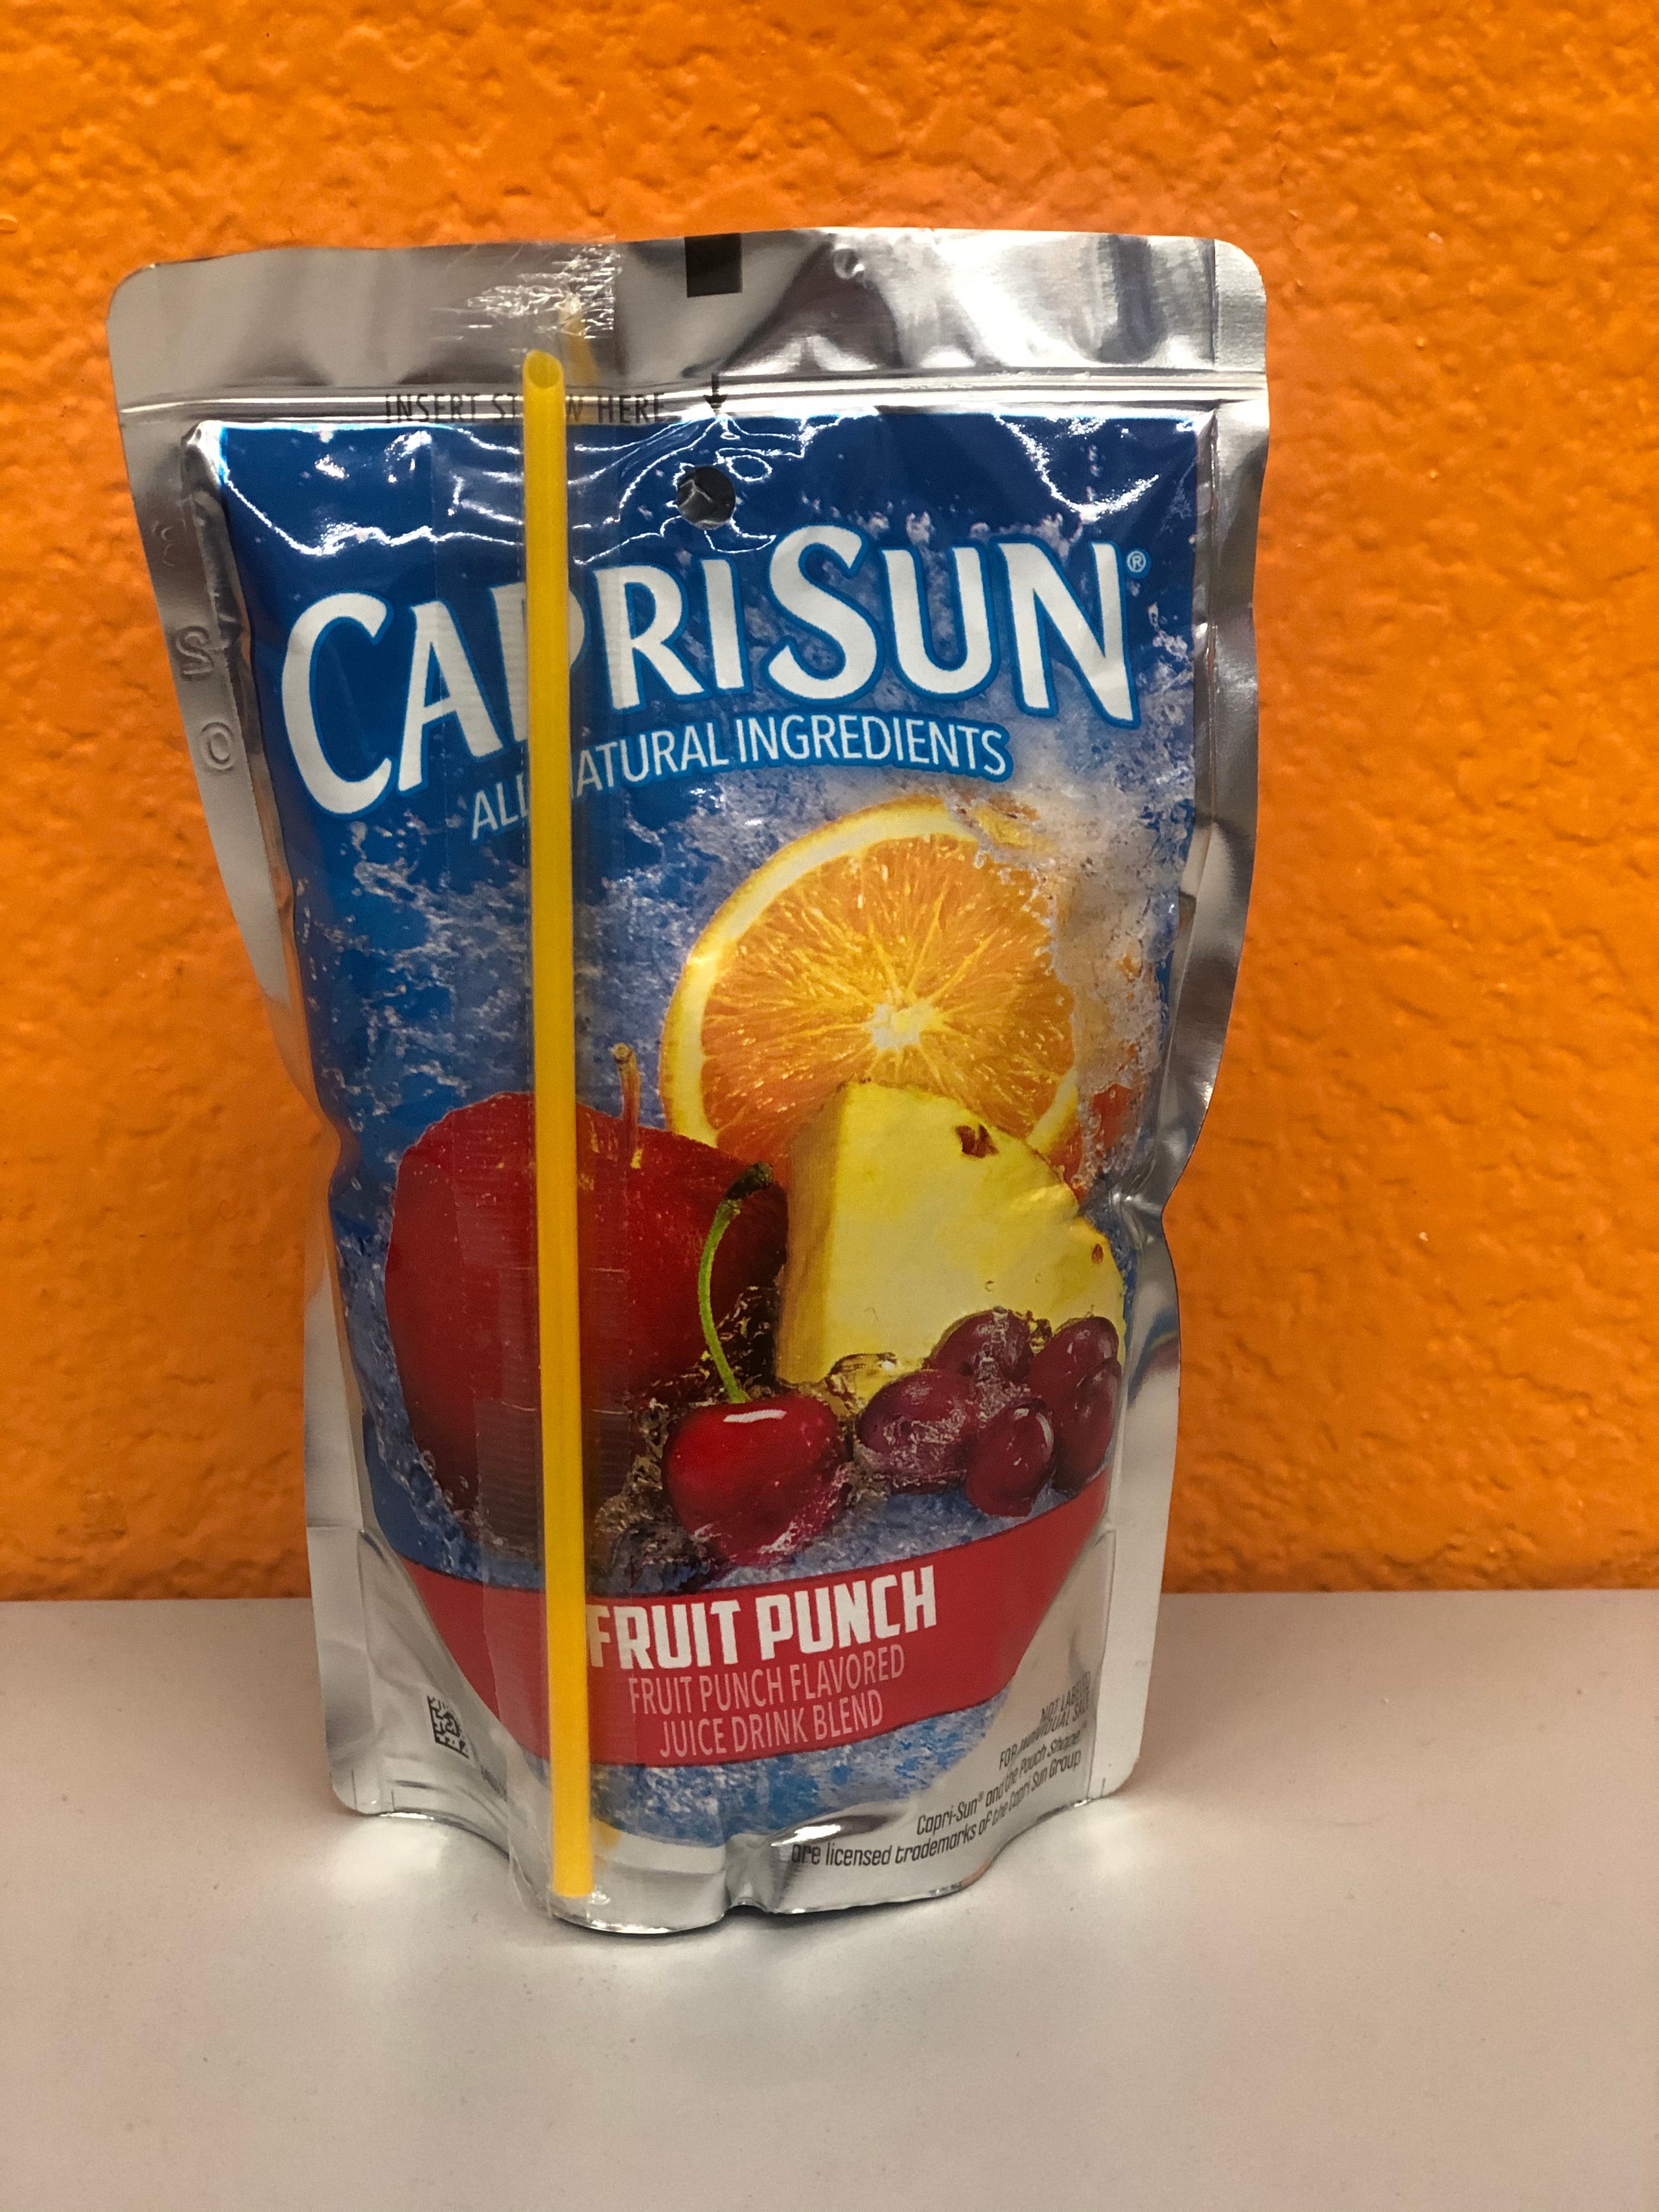 Capri Sun Fruit Punch